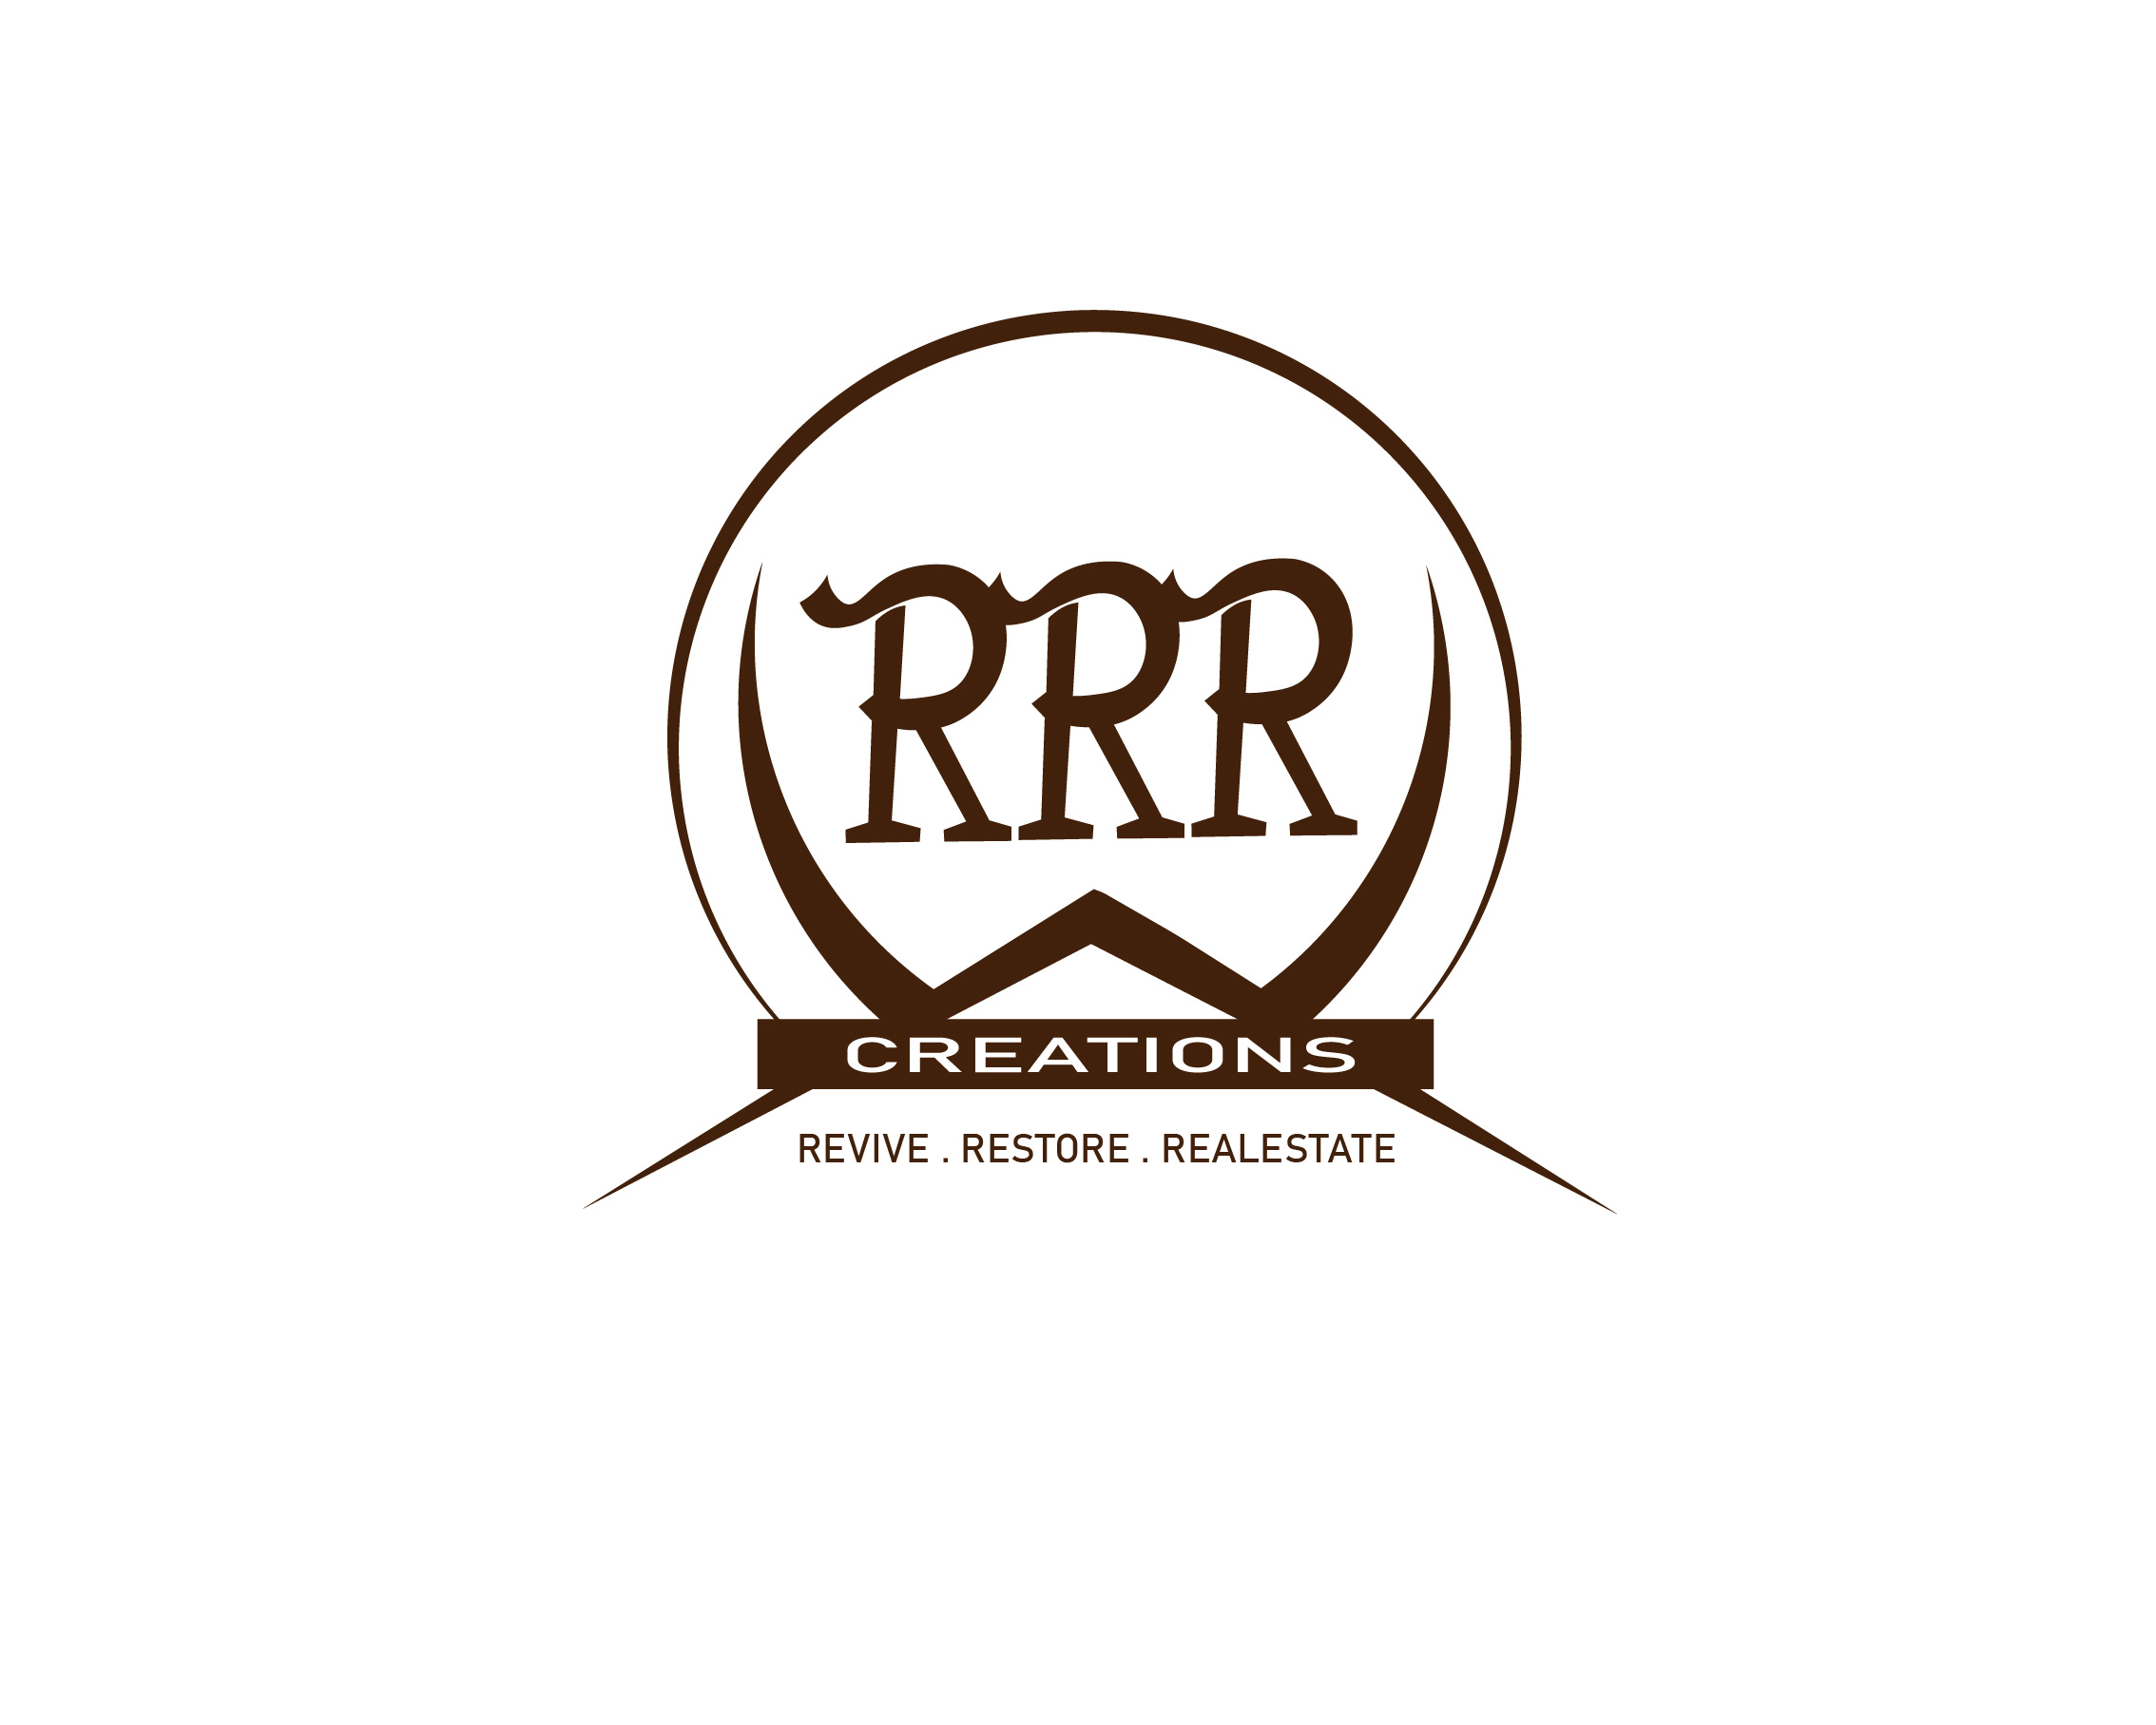 Modern, Professional Logo Design for R3 or RRR by y2 | Design #23432812